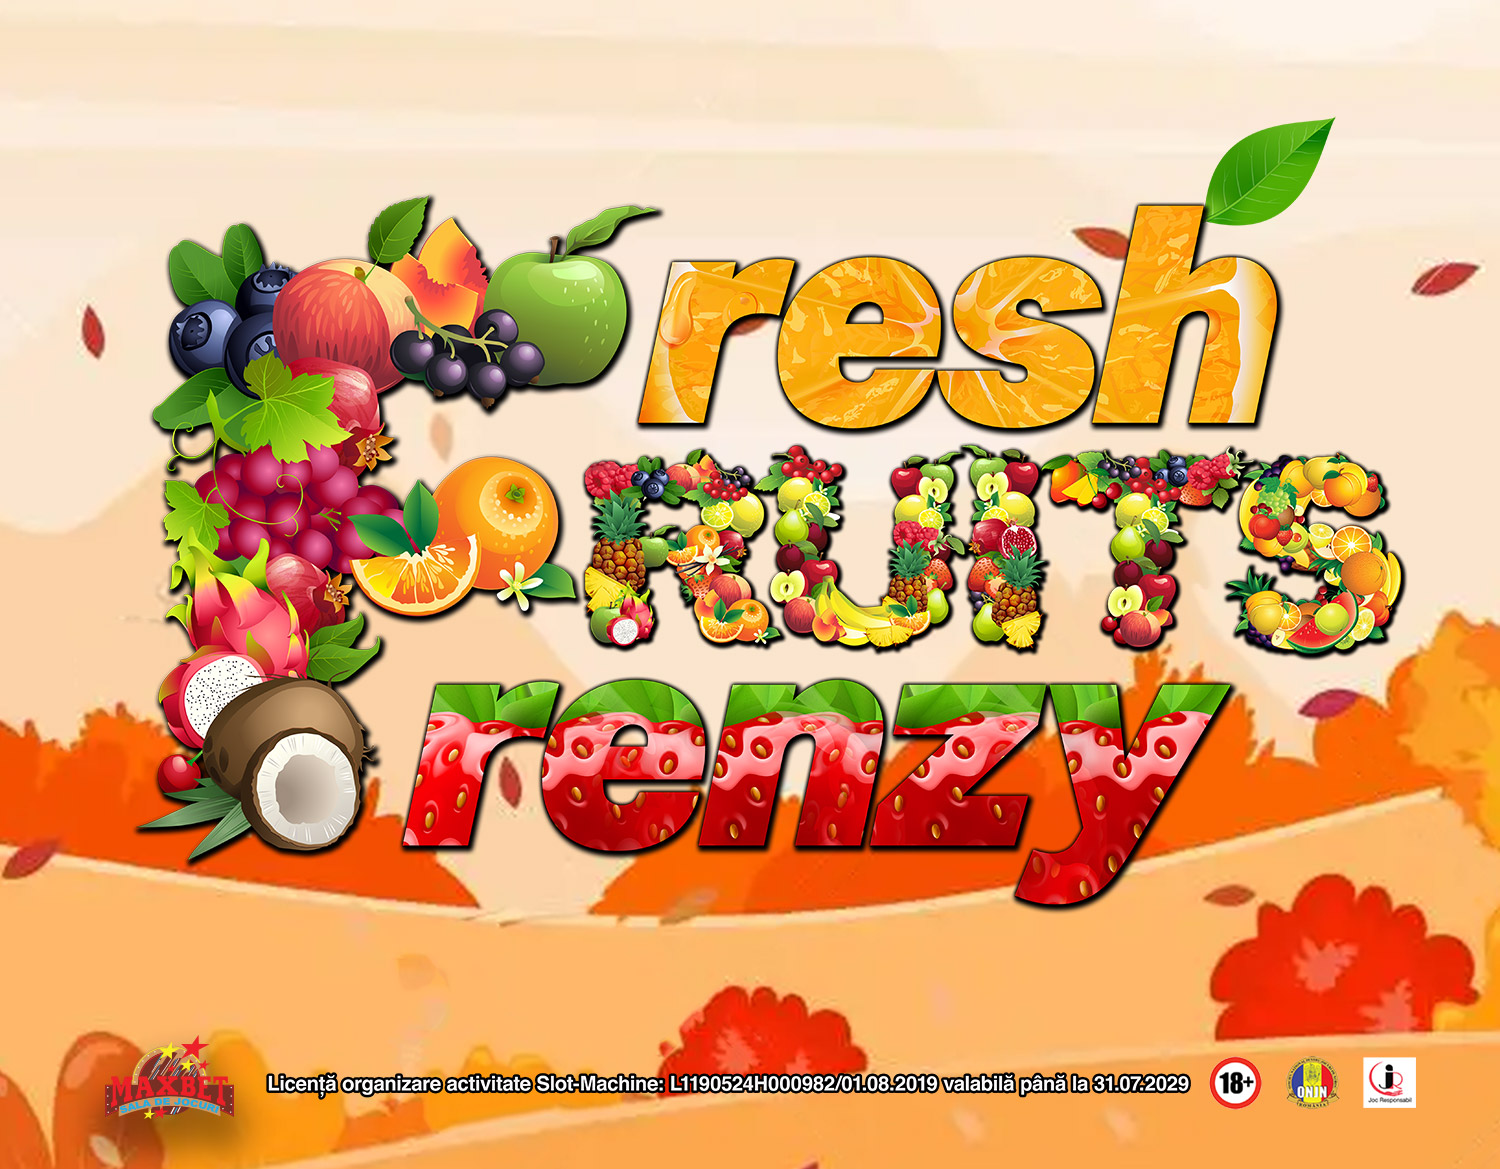 Fresh Fruits Frenzy